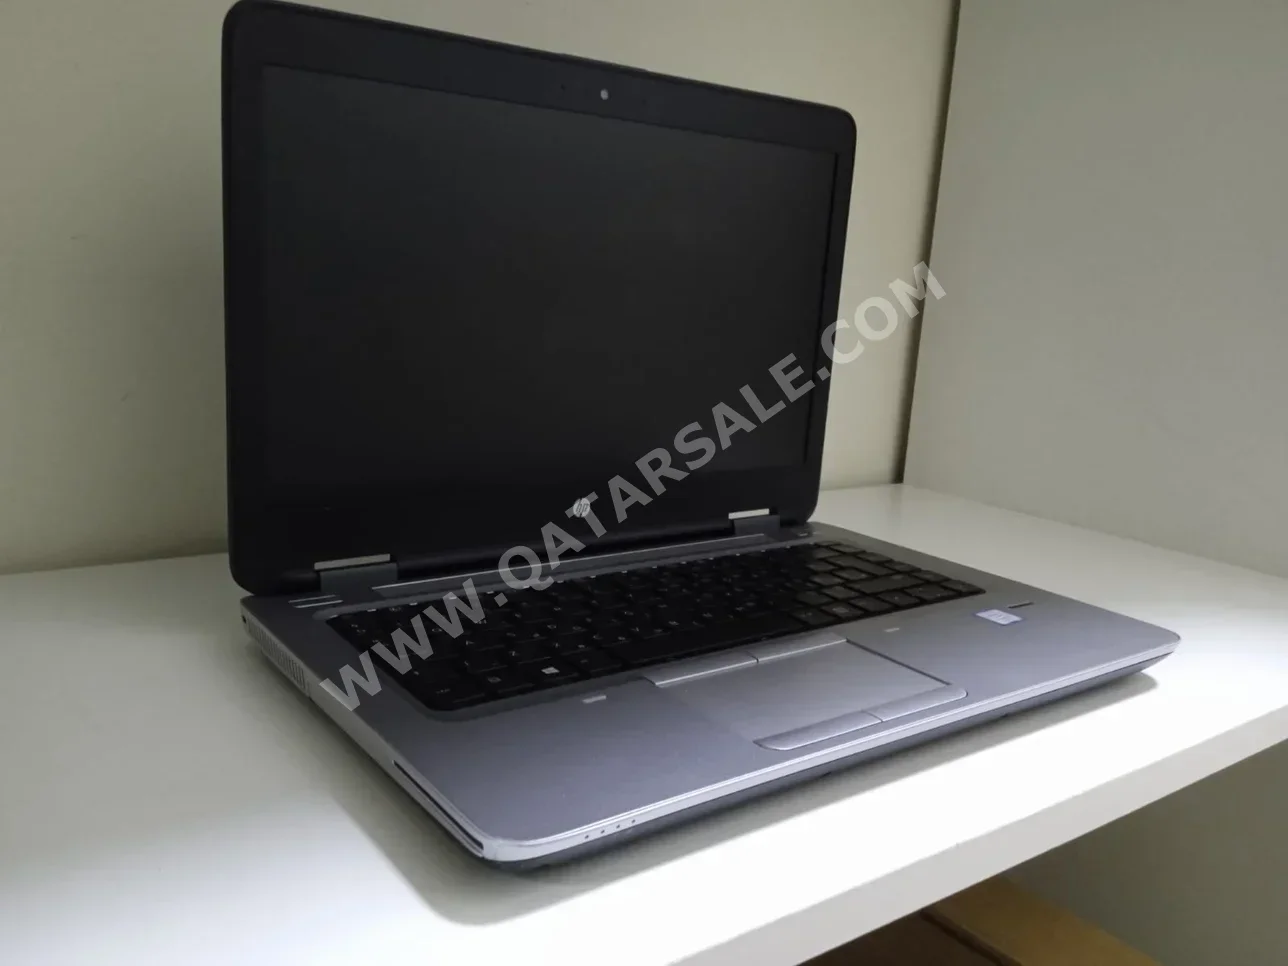 Laptops HP  - ProBook Series  - Black  - Windows 10  - Intel  - Core i7  -Memory (Ram): 8 GB